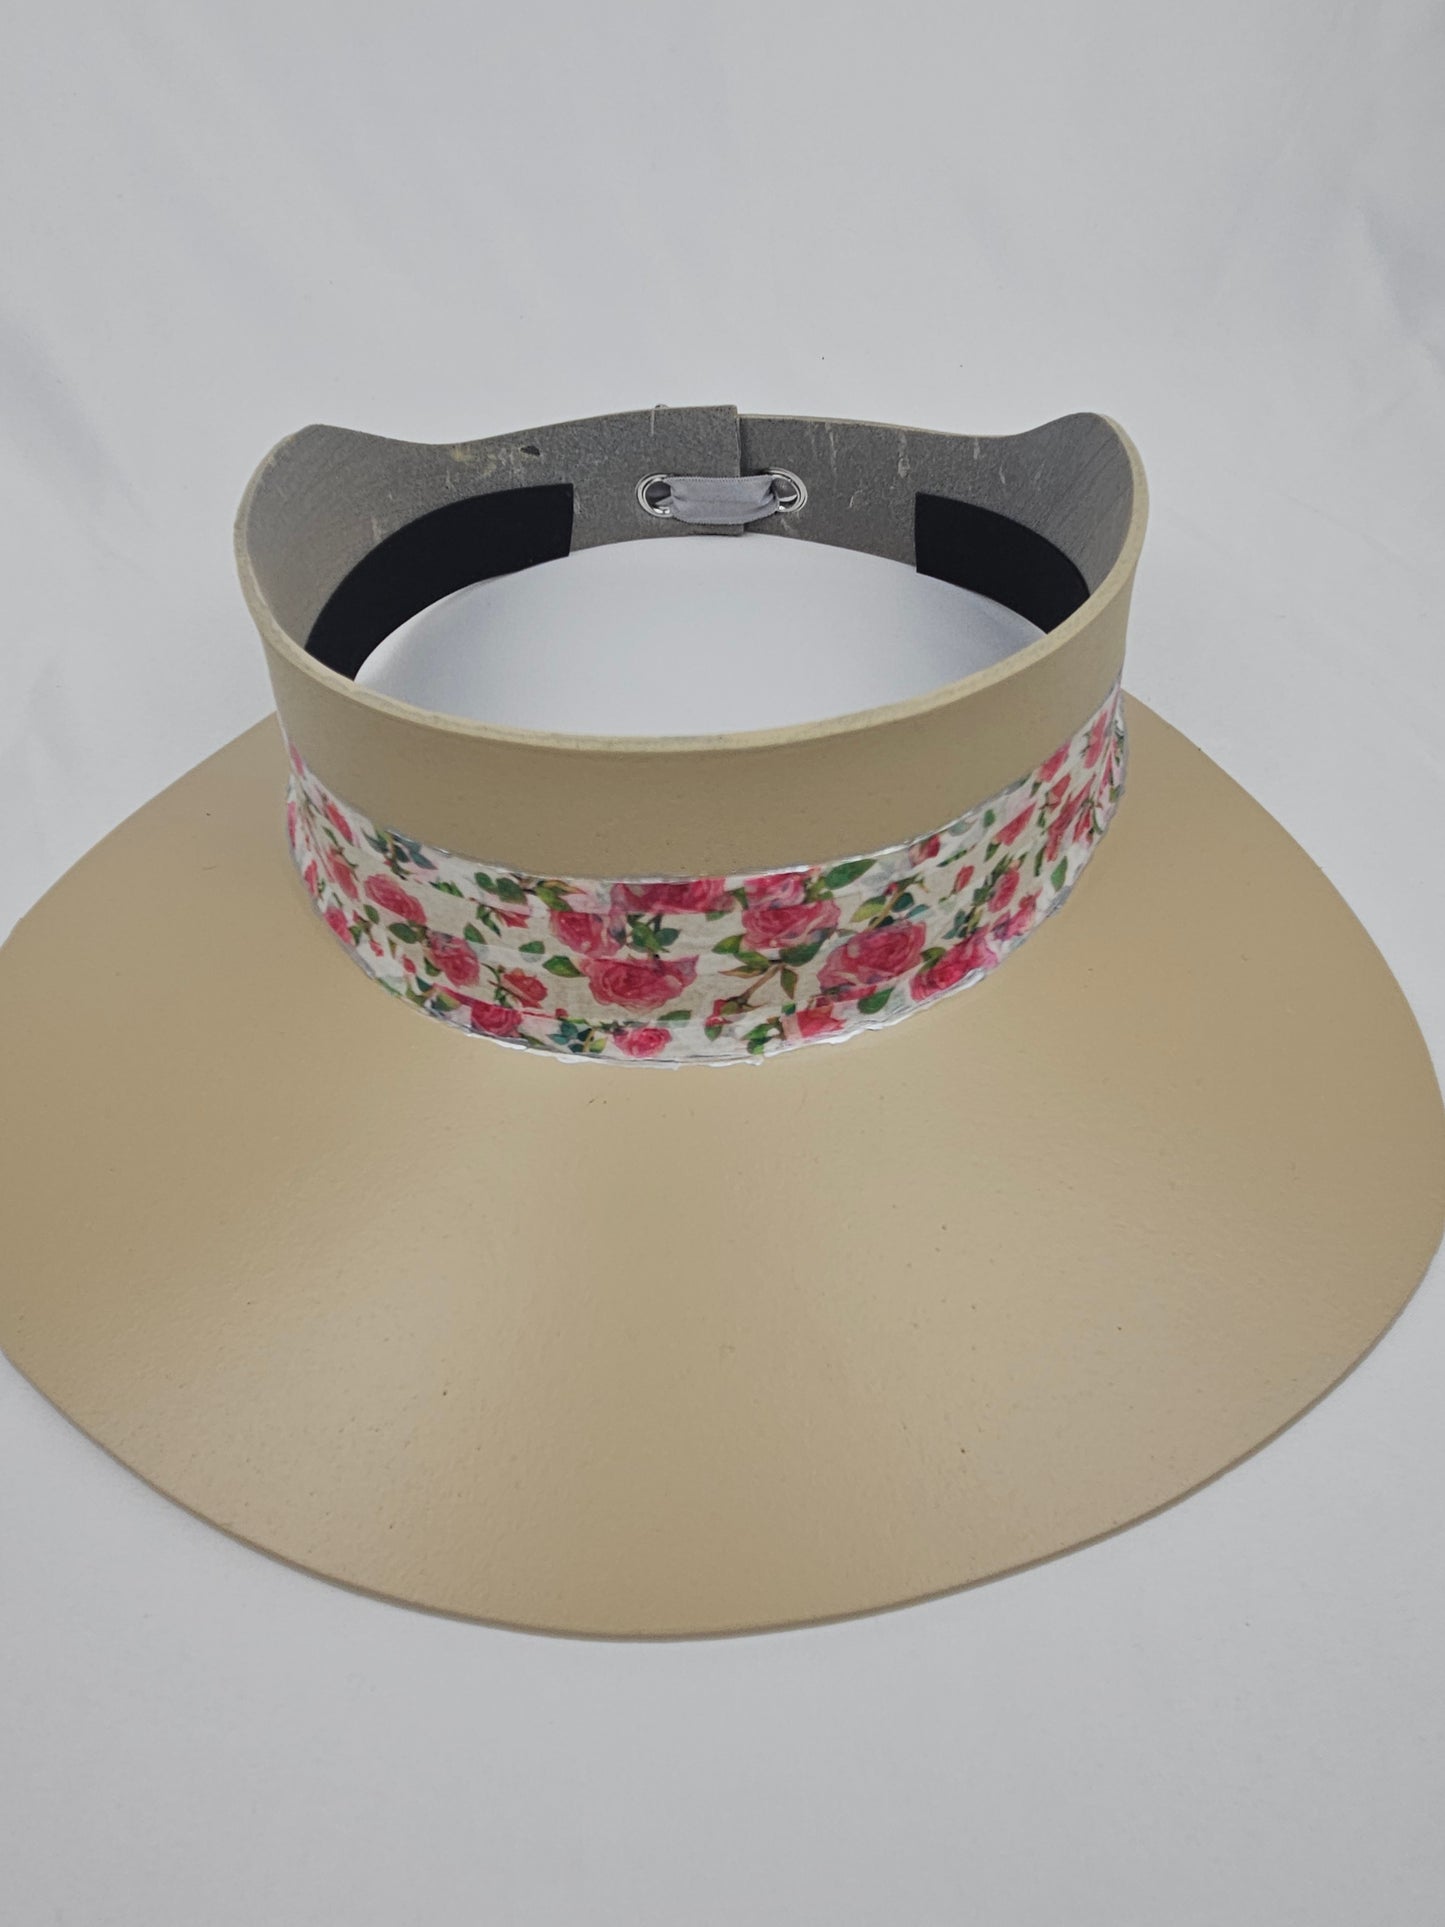 Beautiful Beige Audrey Foam Sun Visor Hat with Bright Pink Floral Band: 1940s, Walks, Brunch, Asian, Golf, Summer, Church, No Headache, Derby